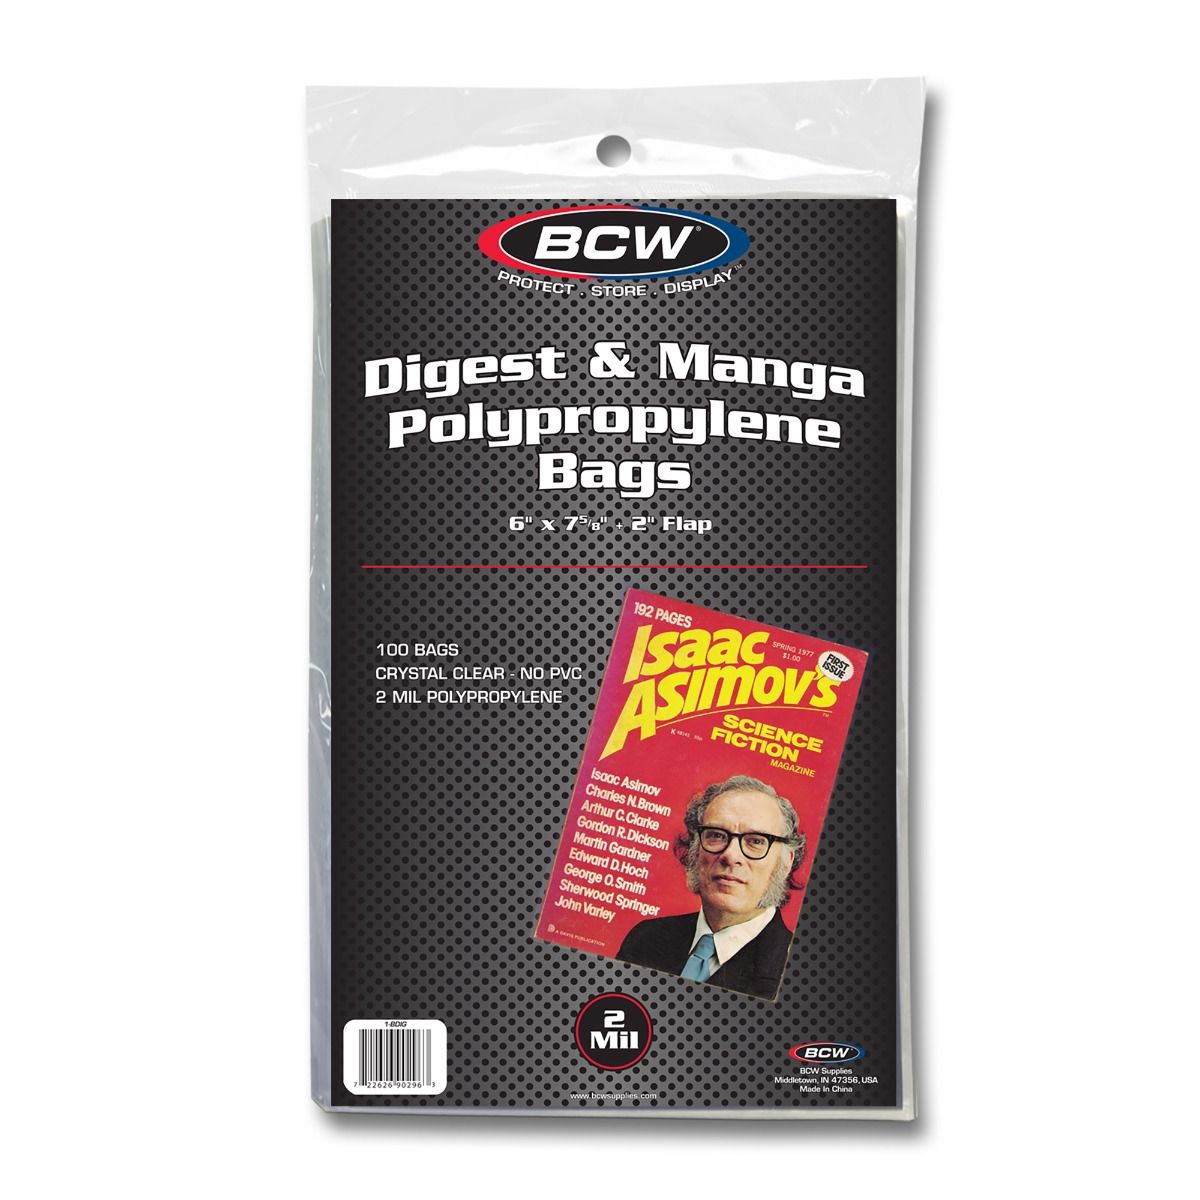 BCW Digest & Manga Polypropylene Bags